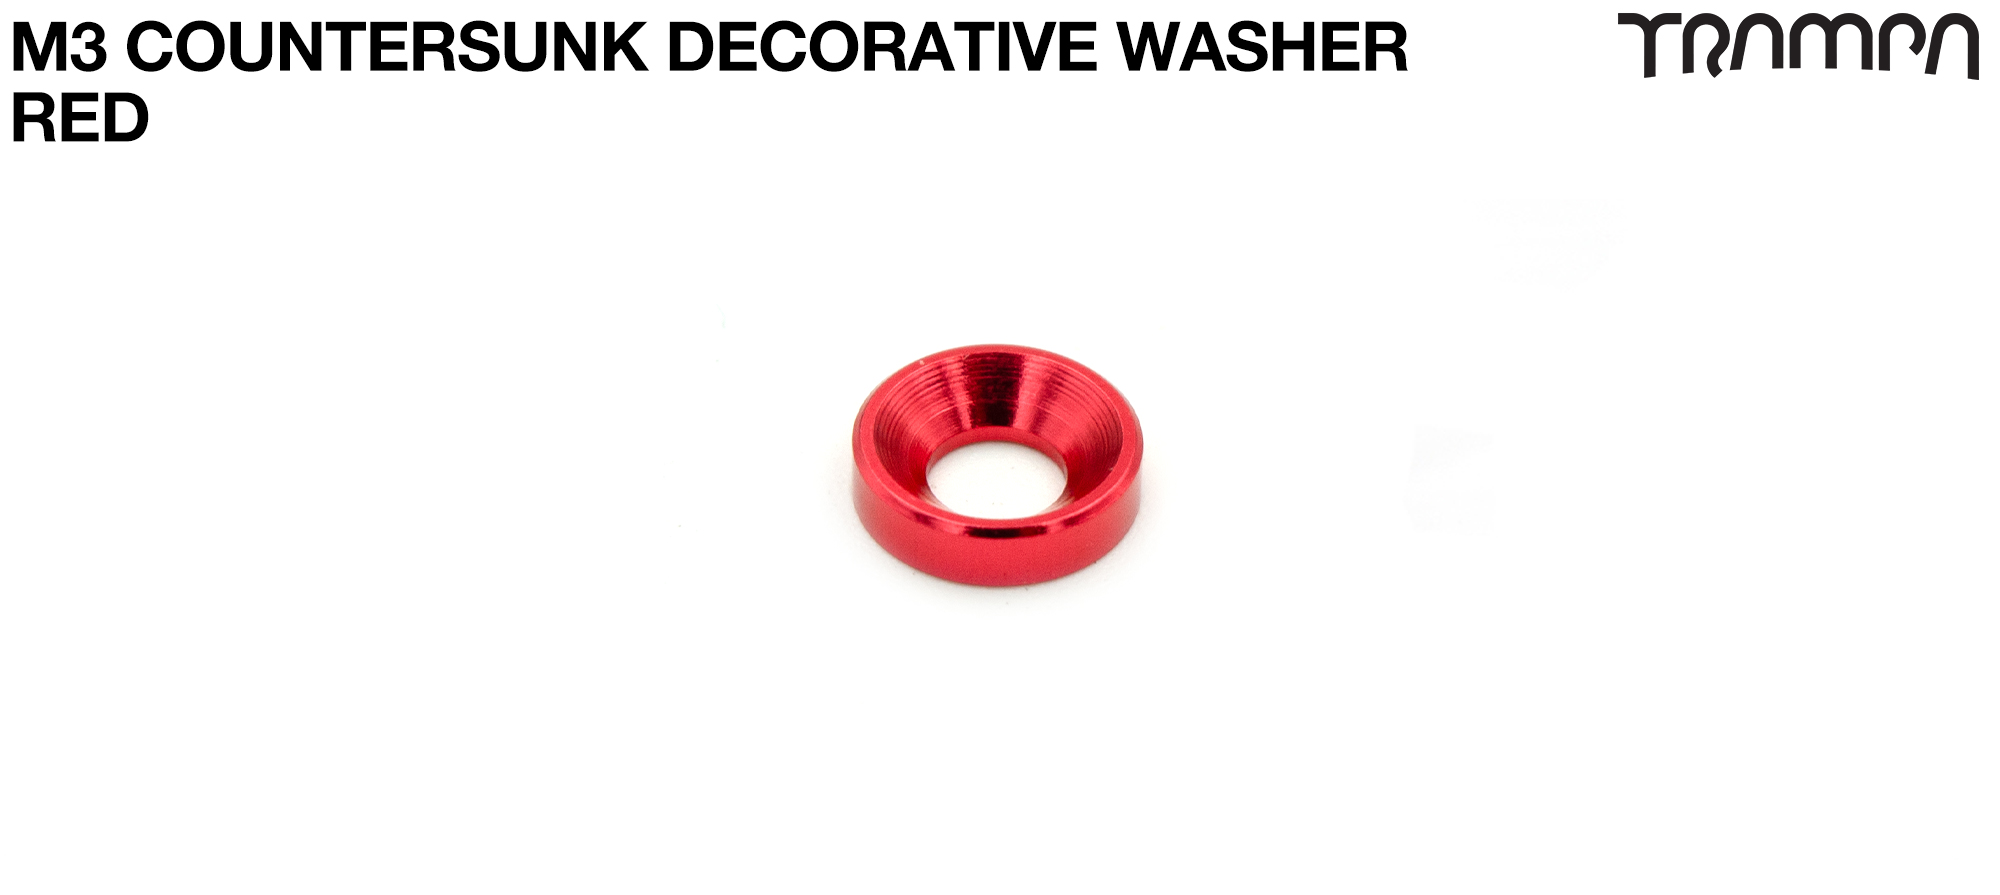 M3 Countersunk Decorative Washer - RED